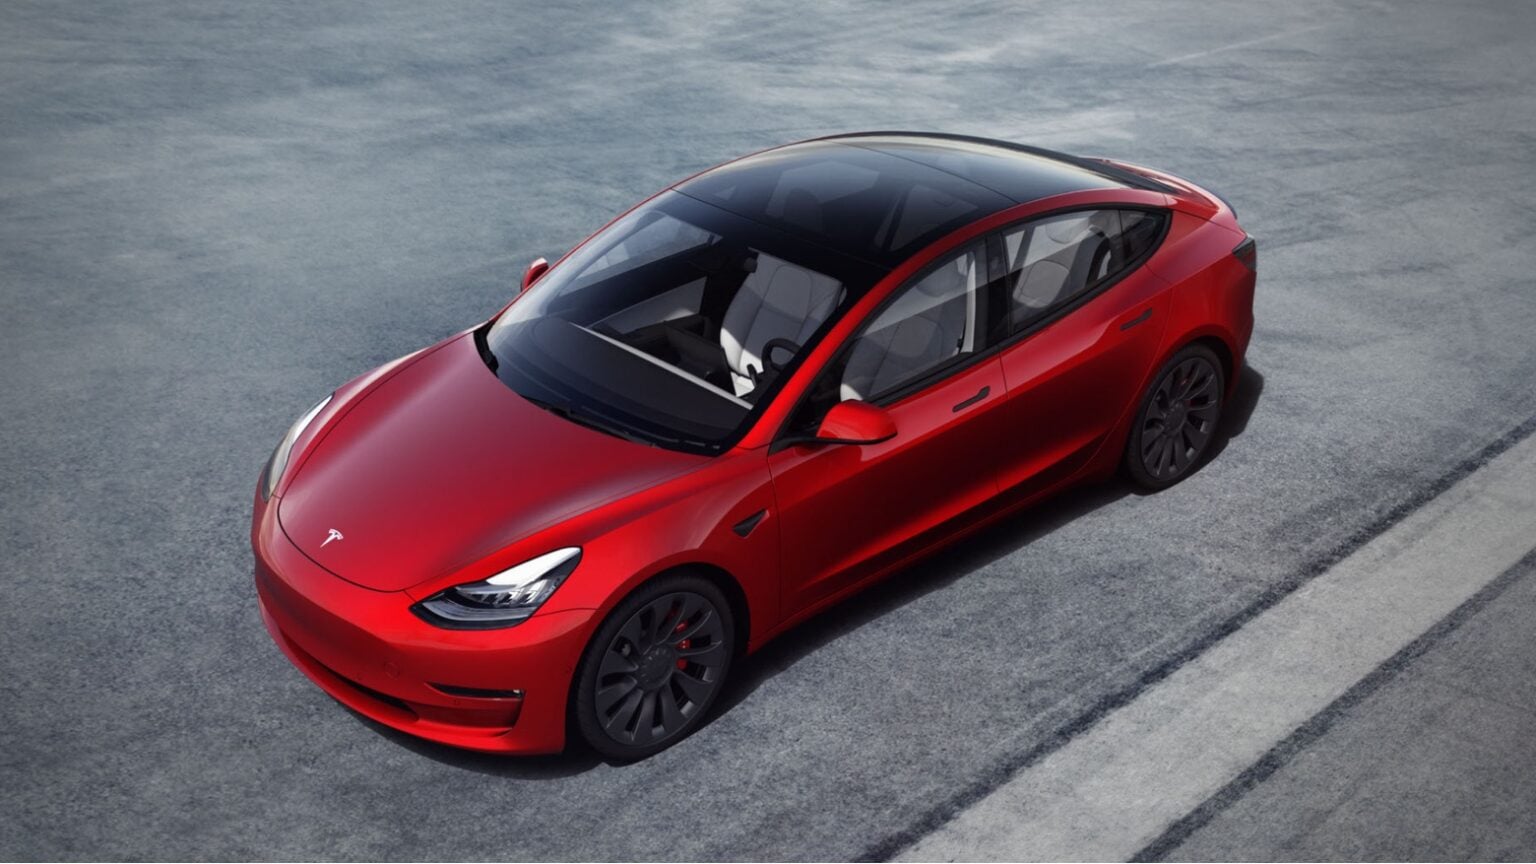 The Tesla Model 3 is the company’s sedan